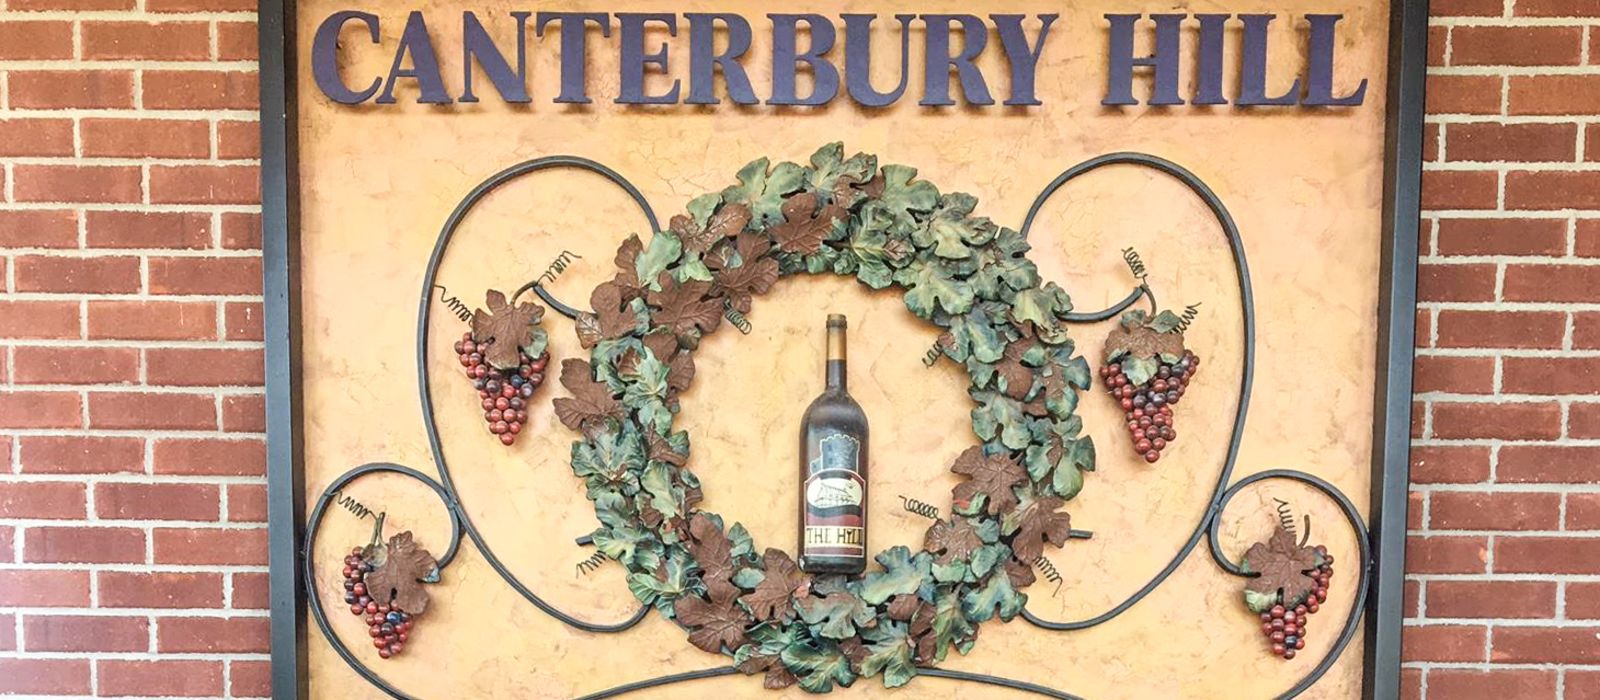 Die Canterbury Hill Winery in Missouri